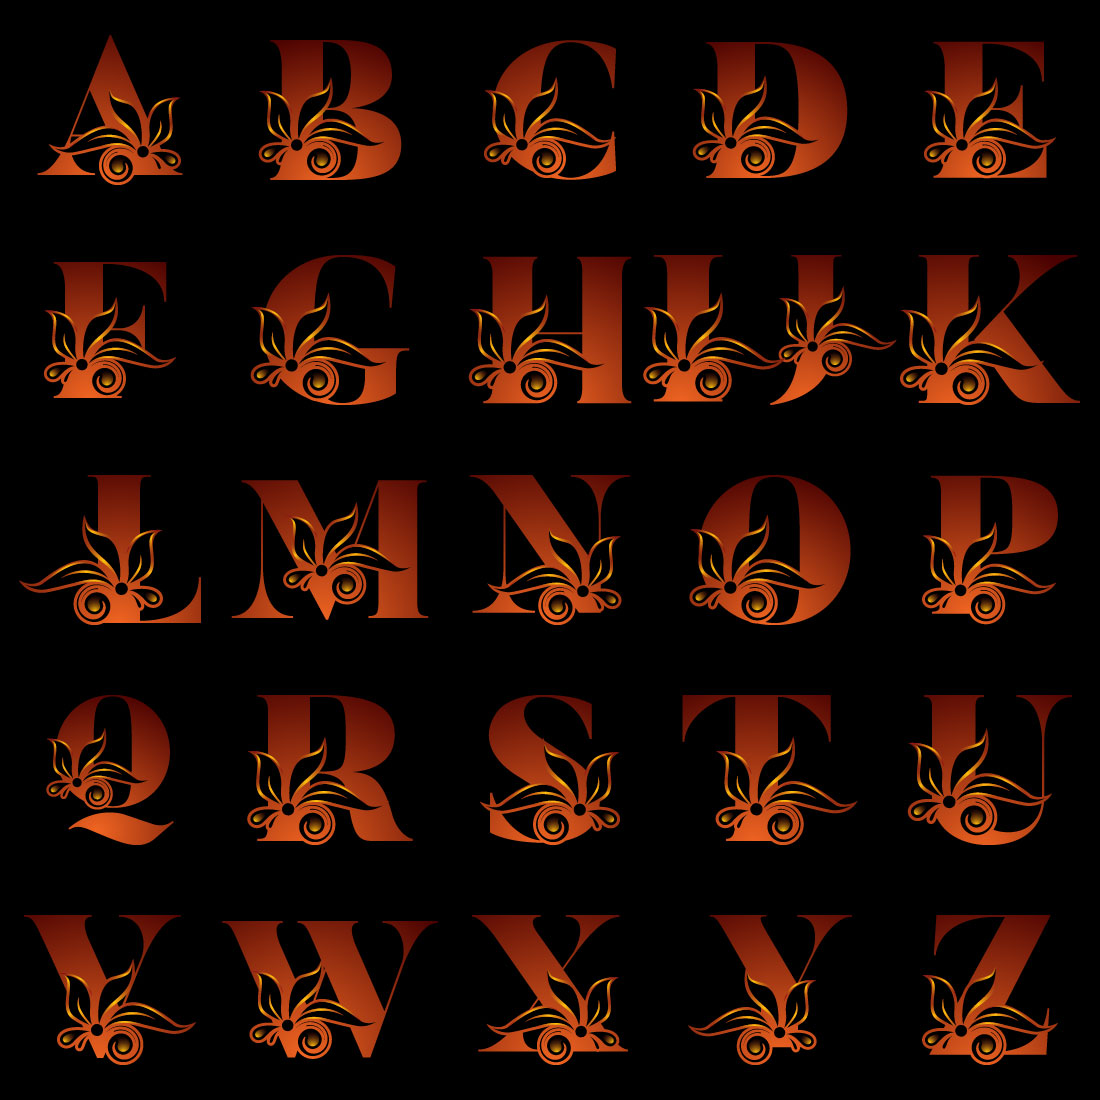 Image of alphabet letters in floral design